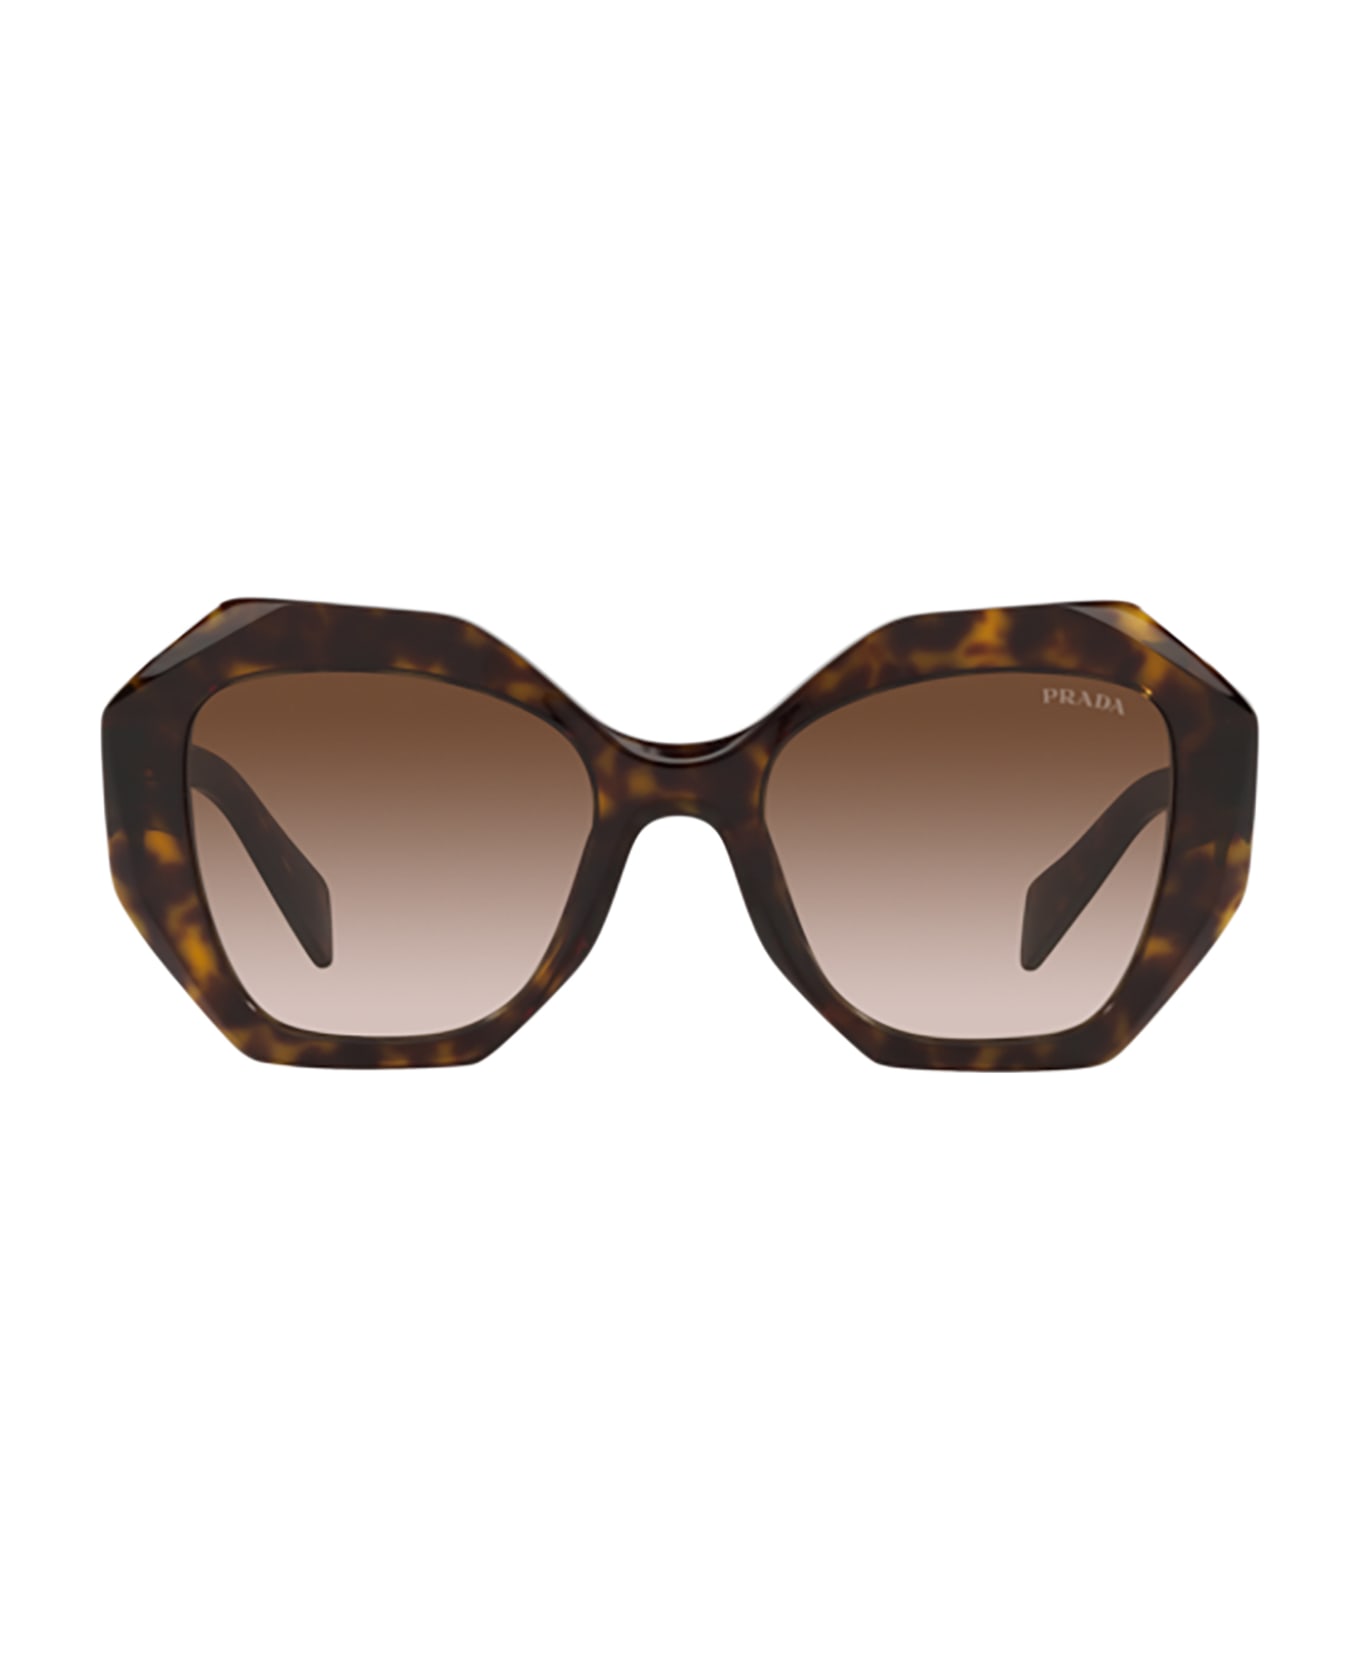 Prada Eyewear 16WS SOLE Sunglasses